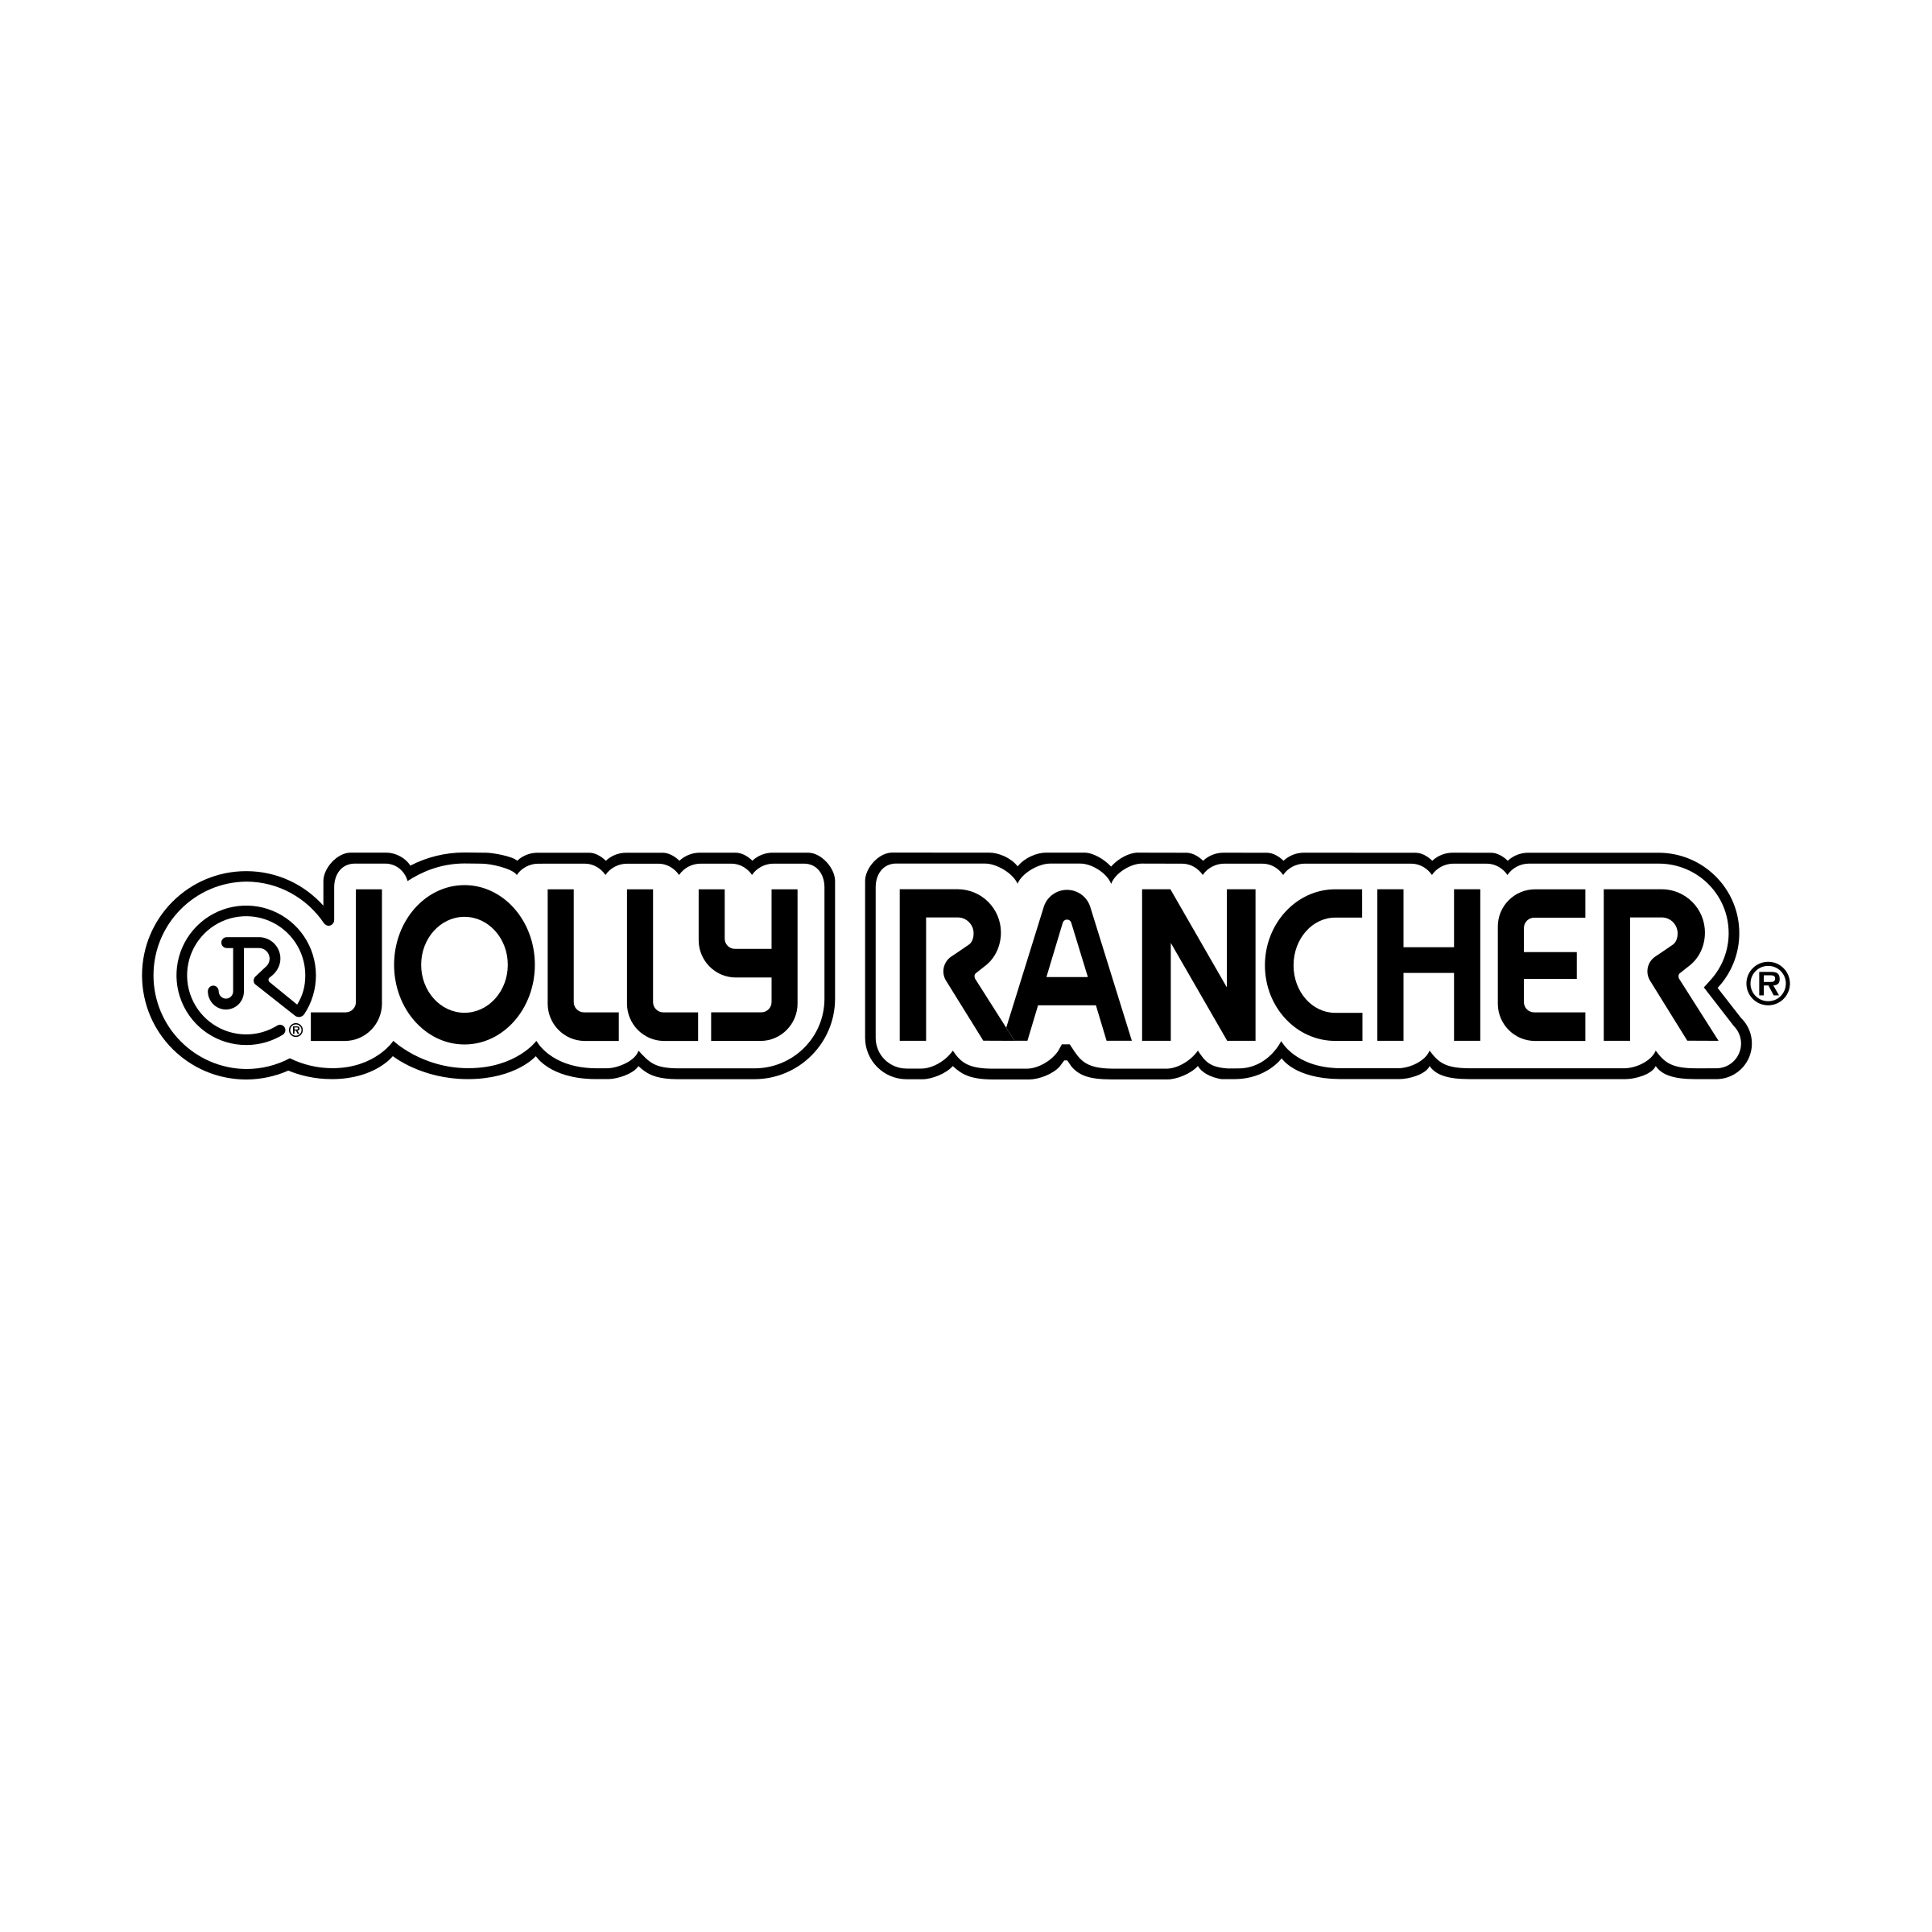 Rancher Logo - Jolly Rancher Logo PNG Transparent & SVG Vector